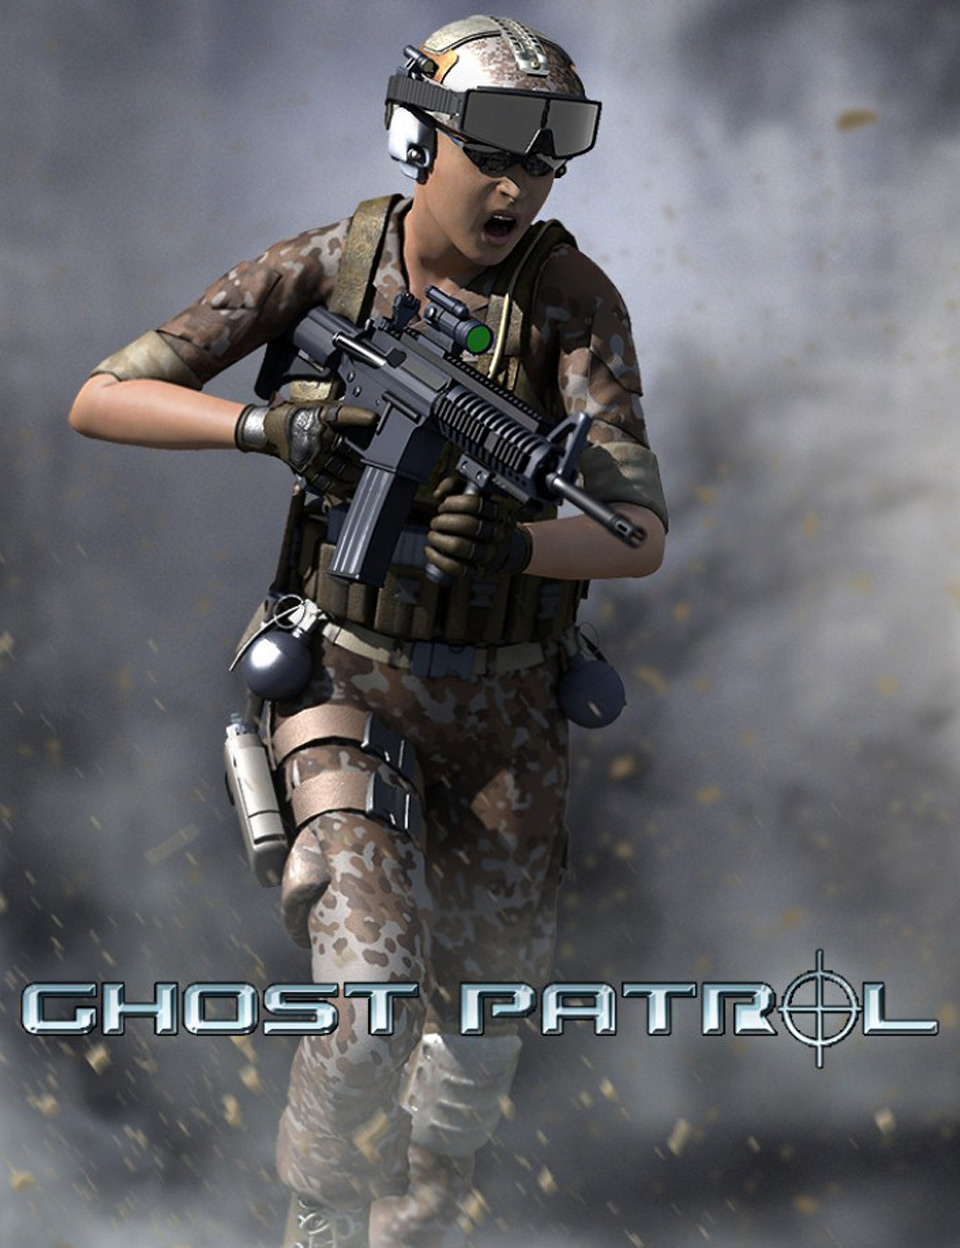 GhostPatrol by: DarkEdgeDesignRuntimeDNA, 3D Models by Daz 3D